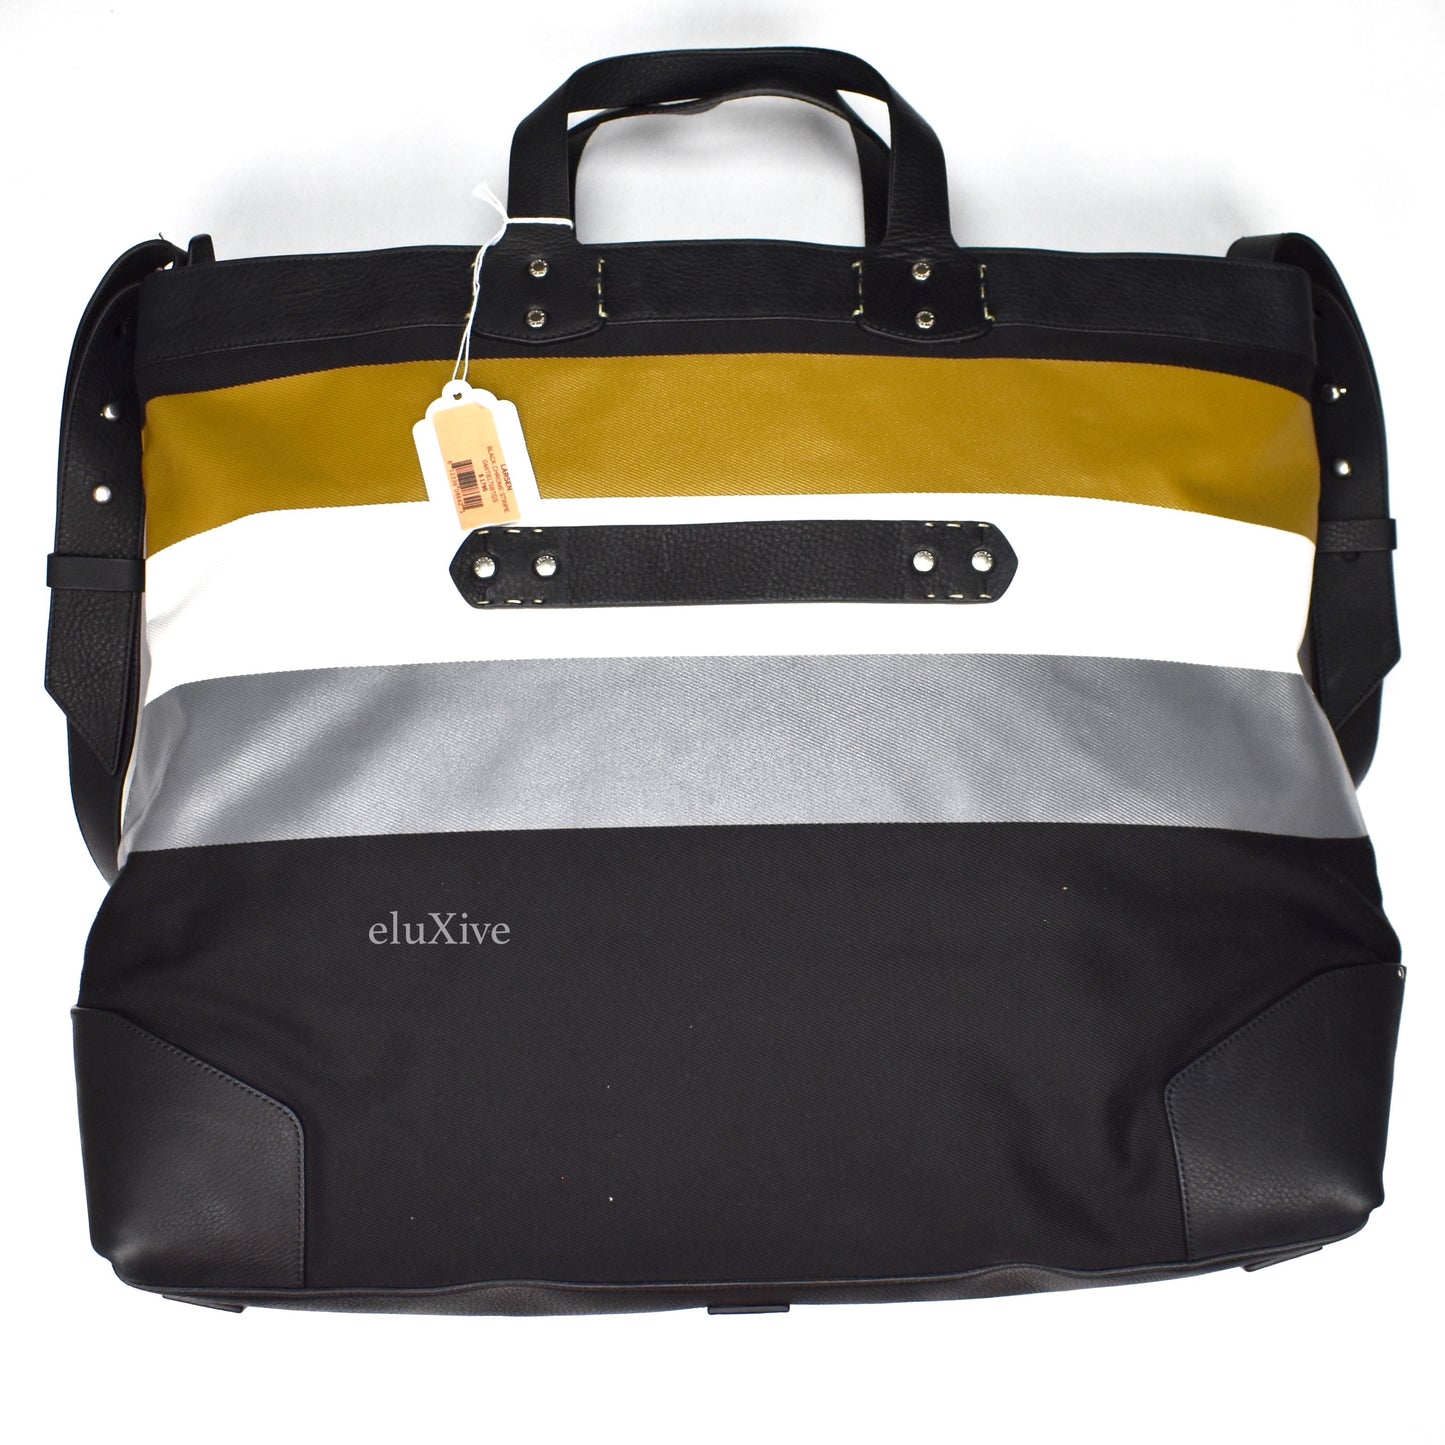 Ghurka - Web Stripe Larsen Bag